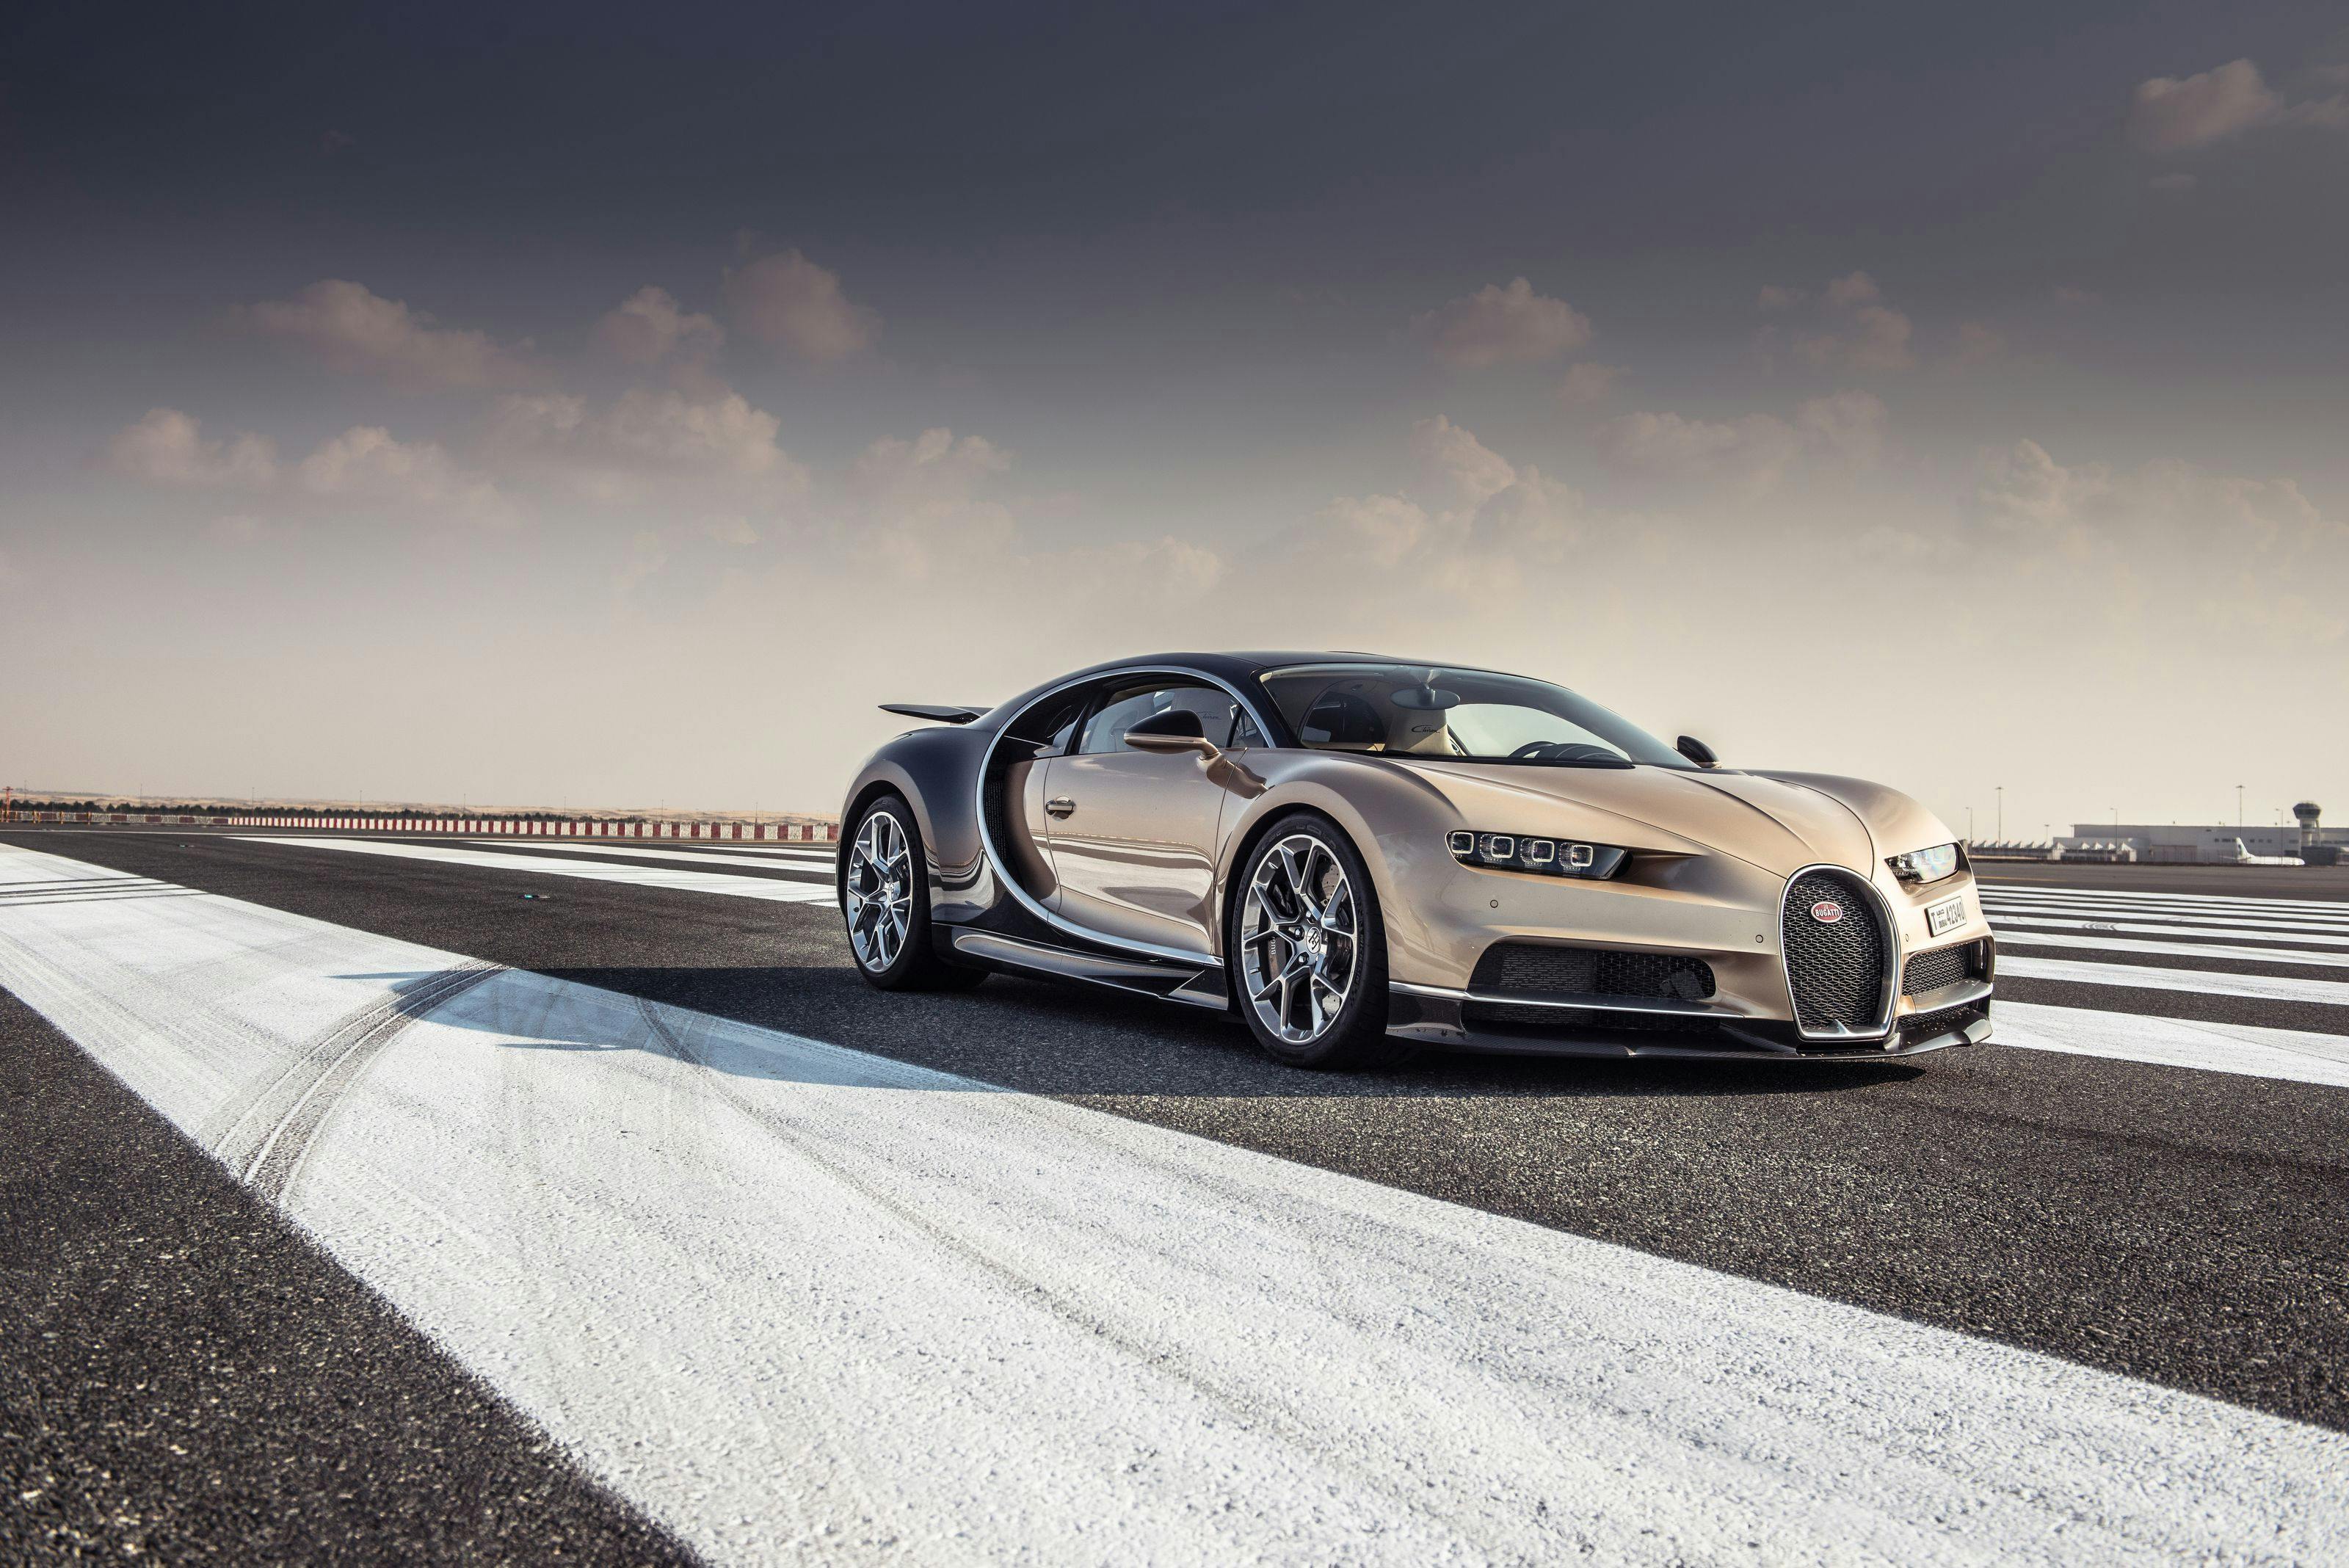 BBC TopGear Magazine honours Bugatti Chiron as “Hypercar of the Year”